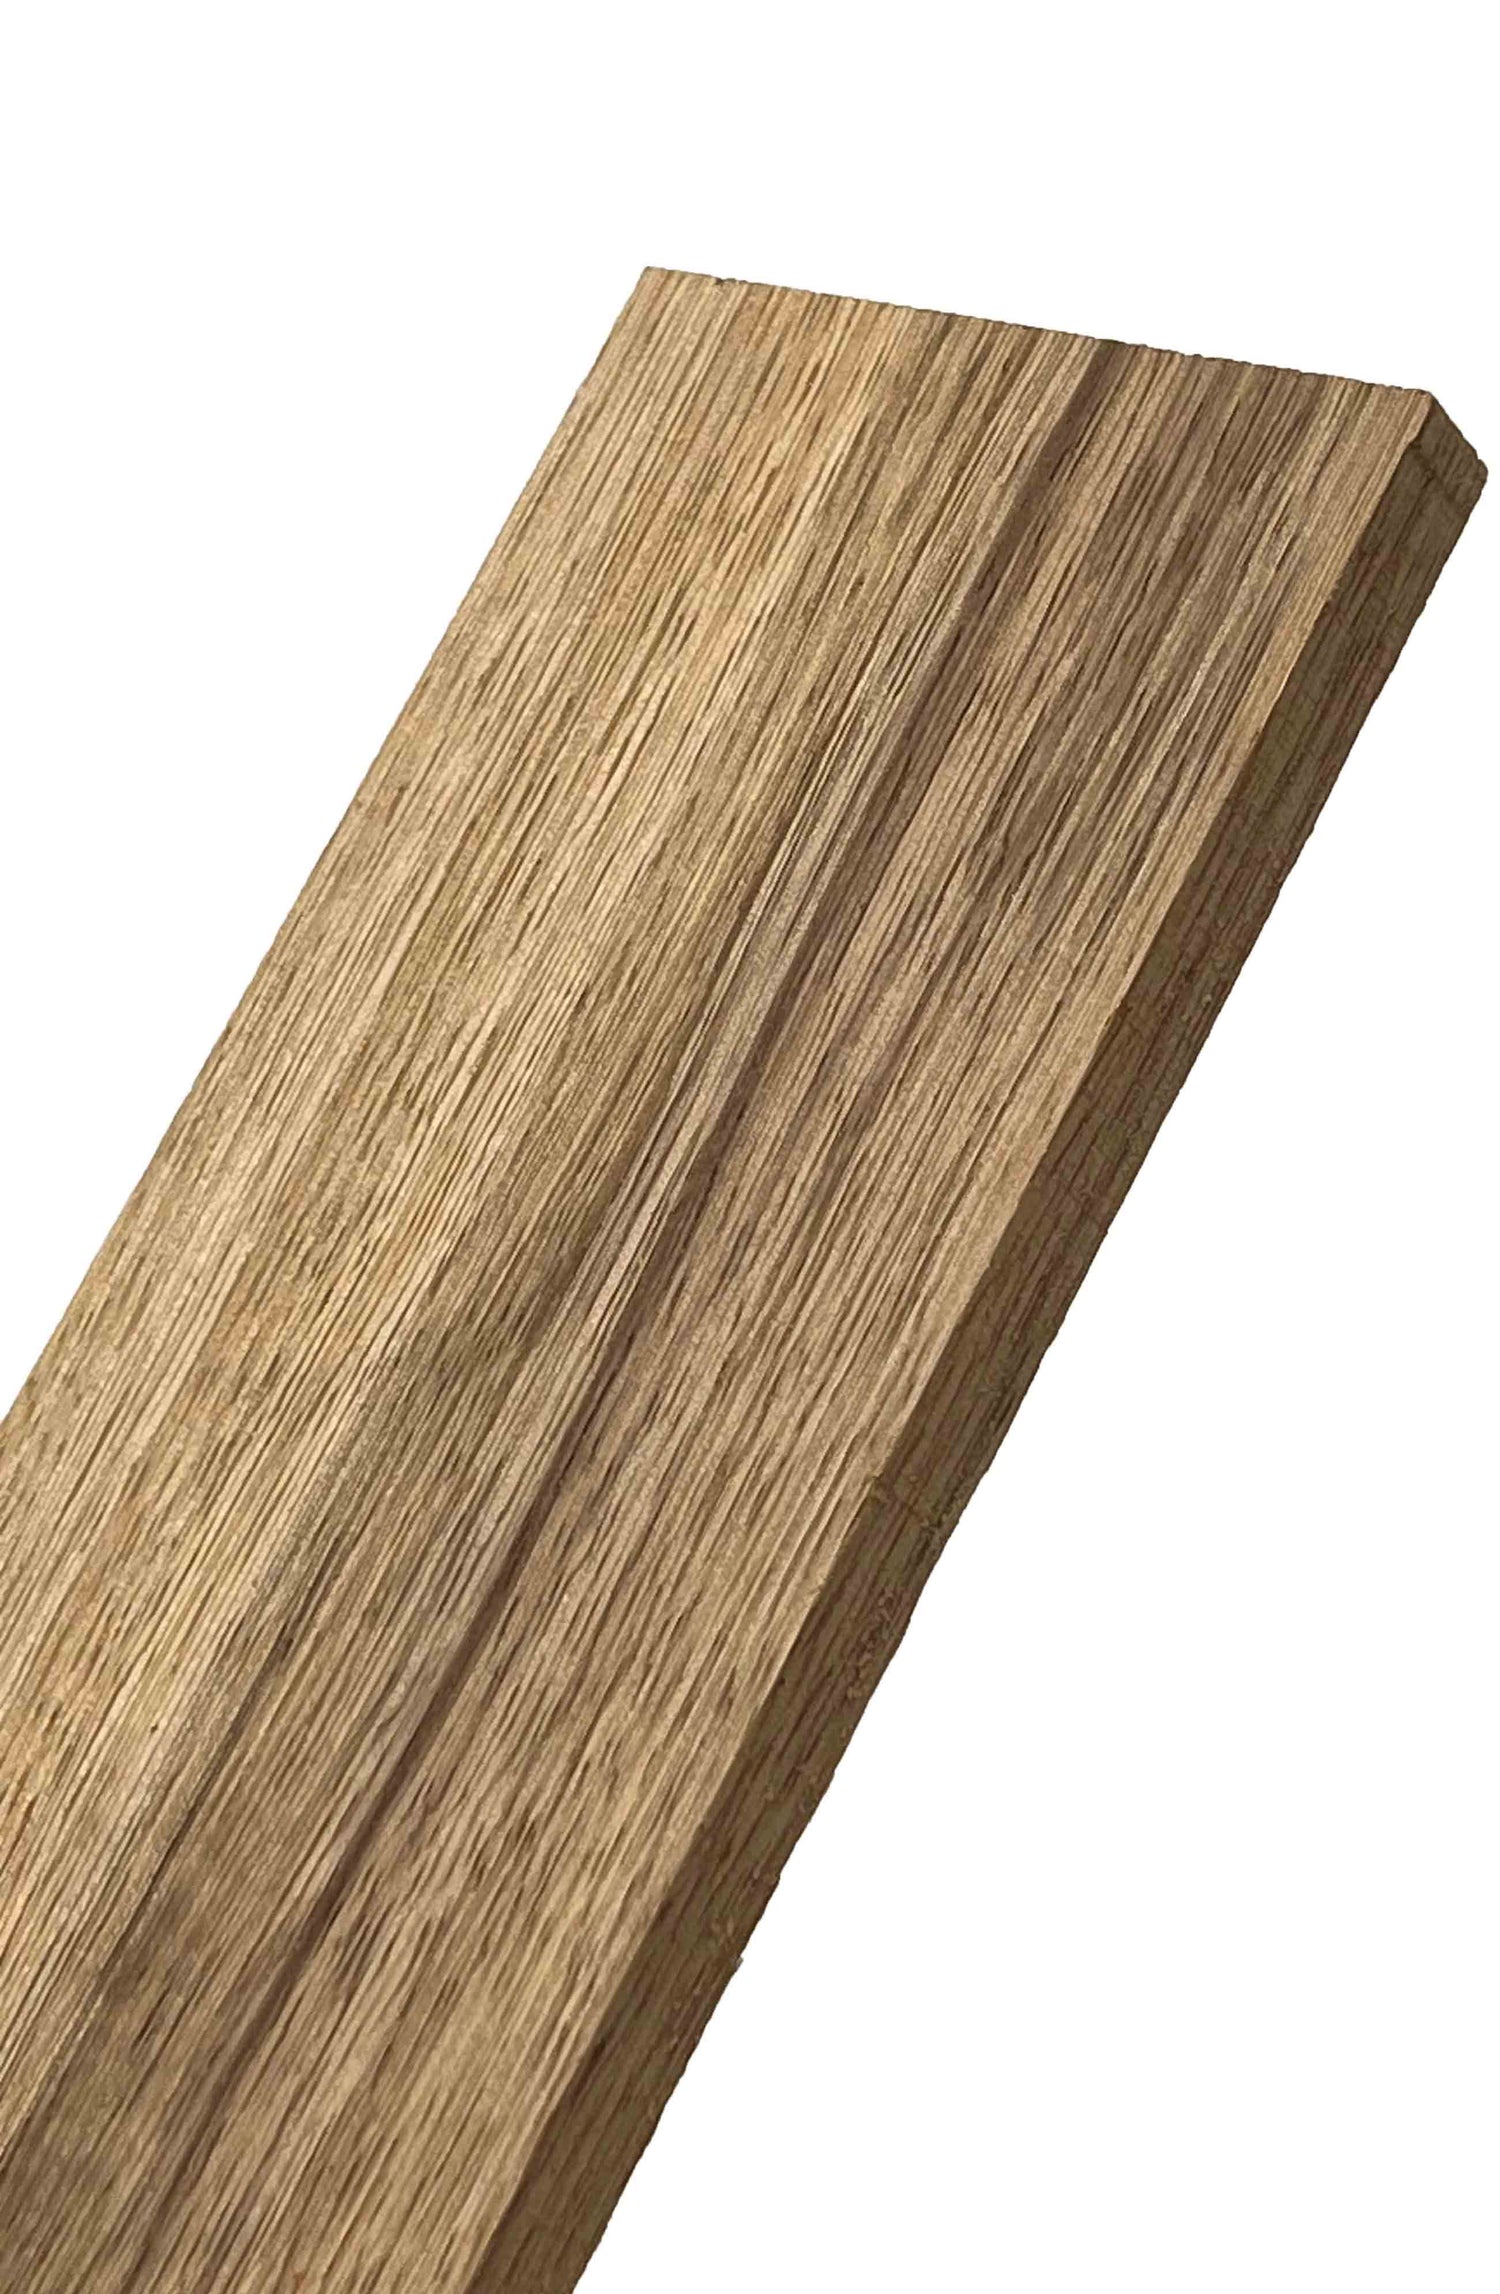 Morado/ Santos Rosewood Thin Stock Lumber Boards Wood Crafts